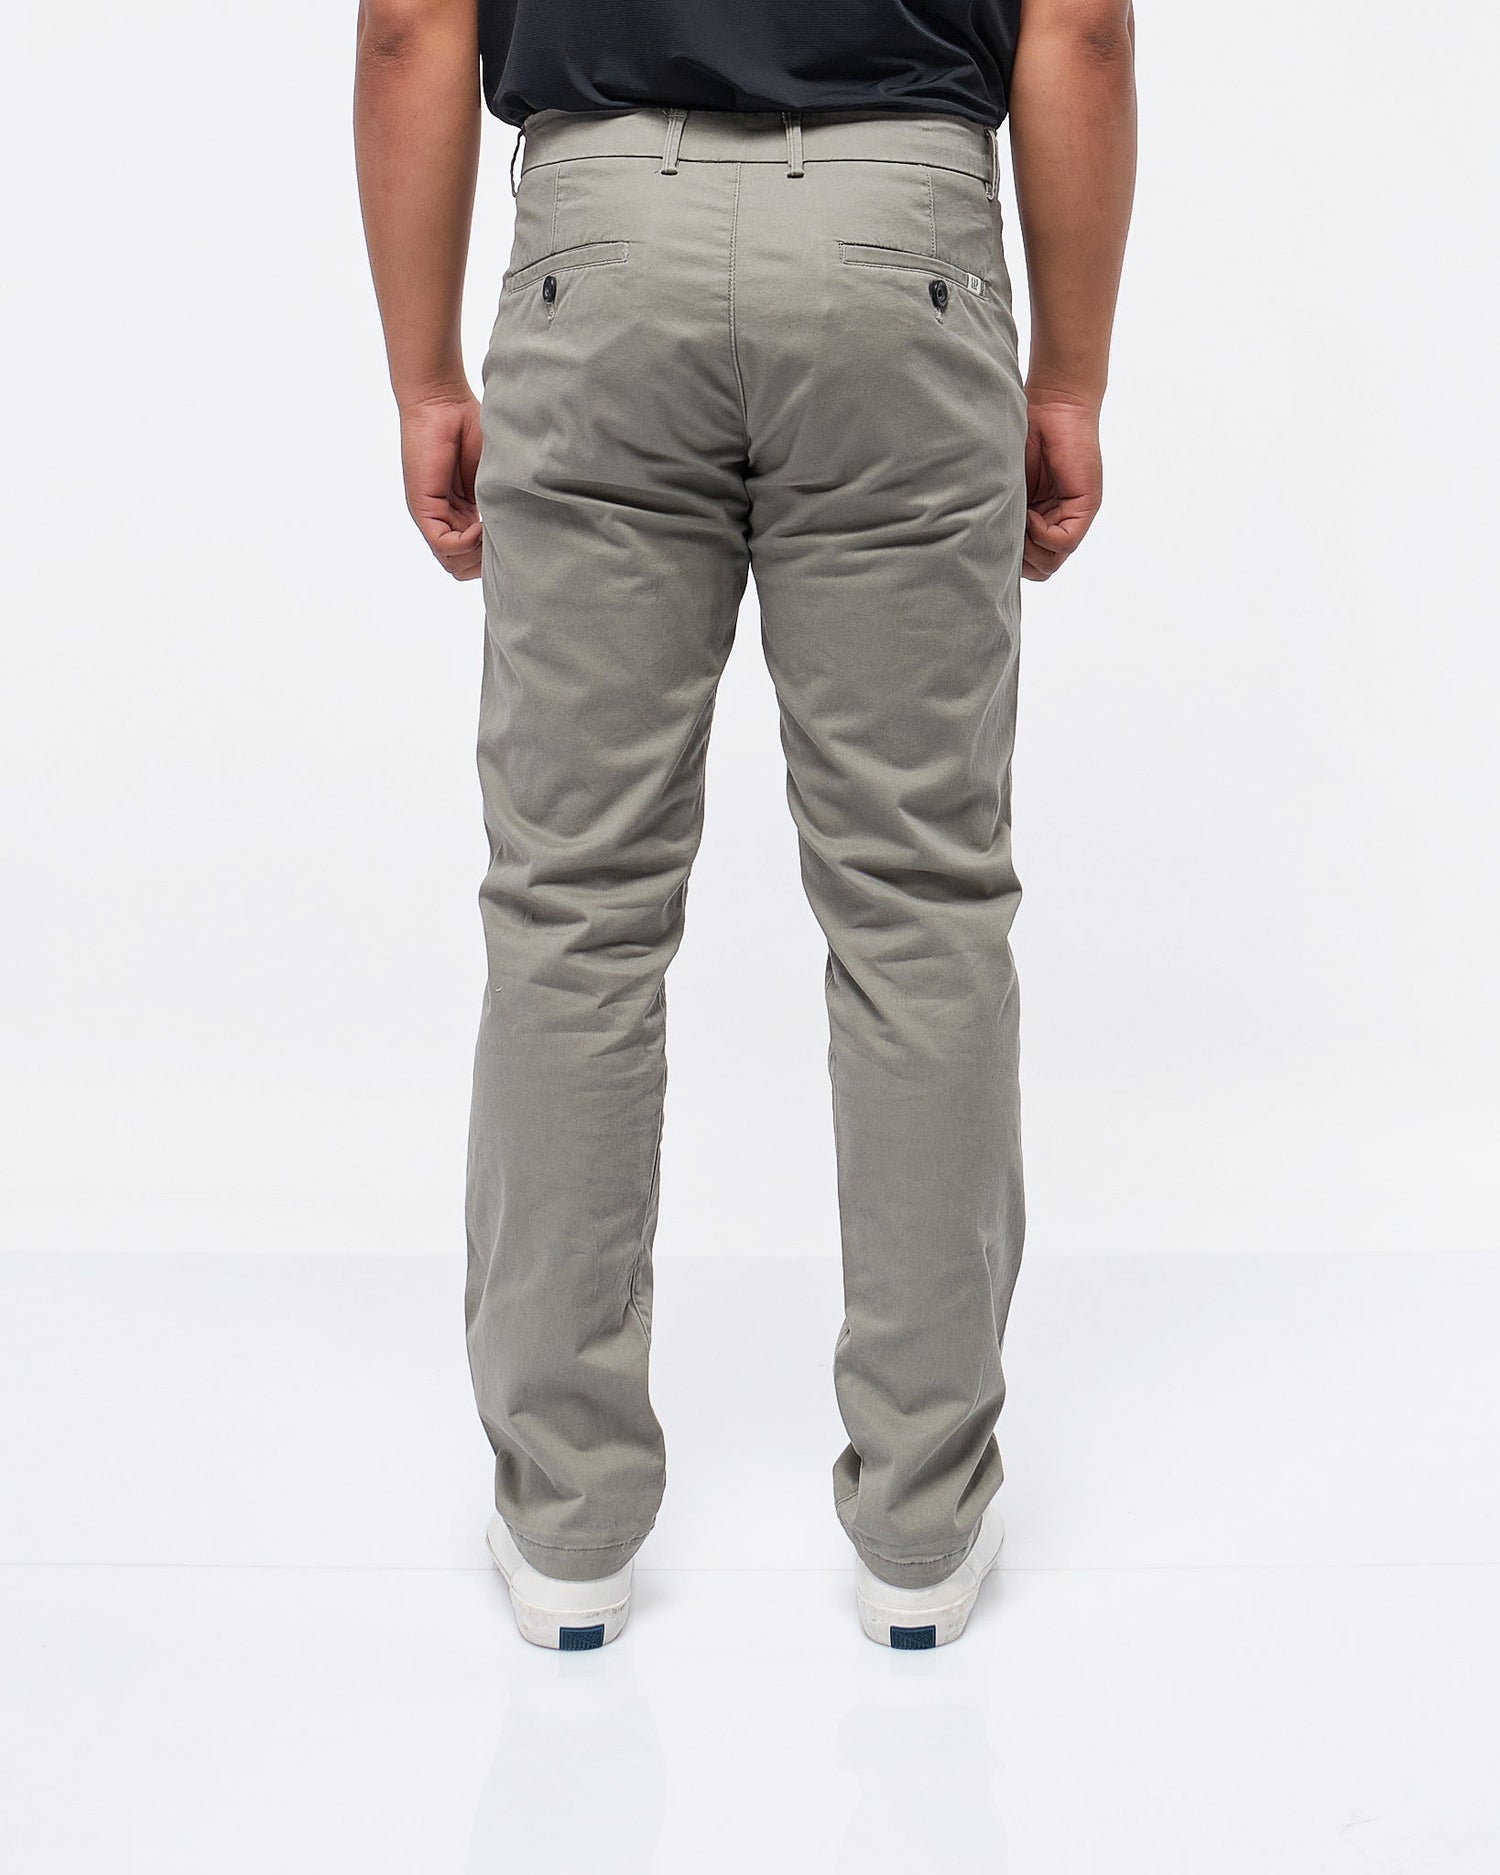 Gap Khaki Regular Fit Men Pants 23.90 - MOI OUTFIT